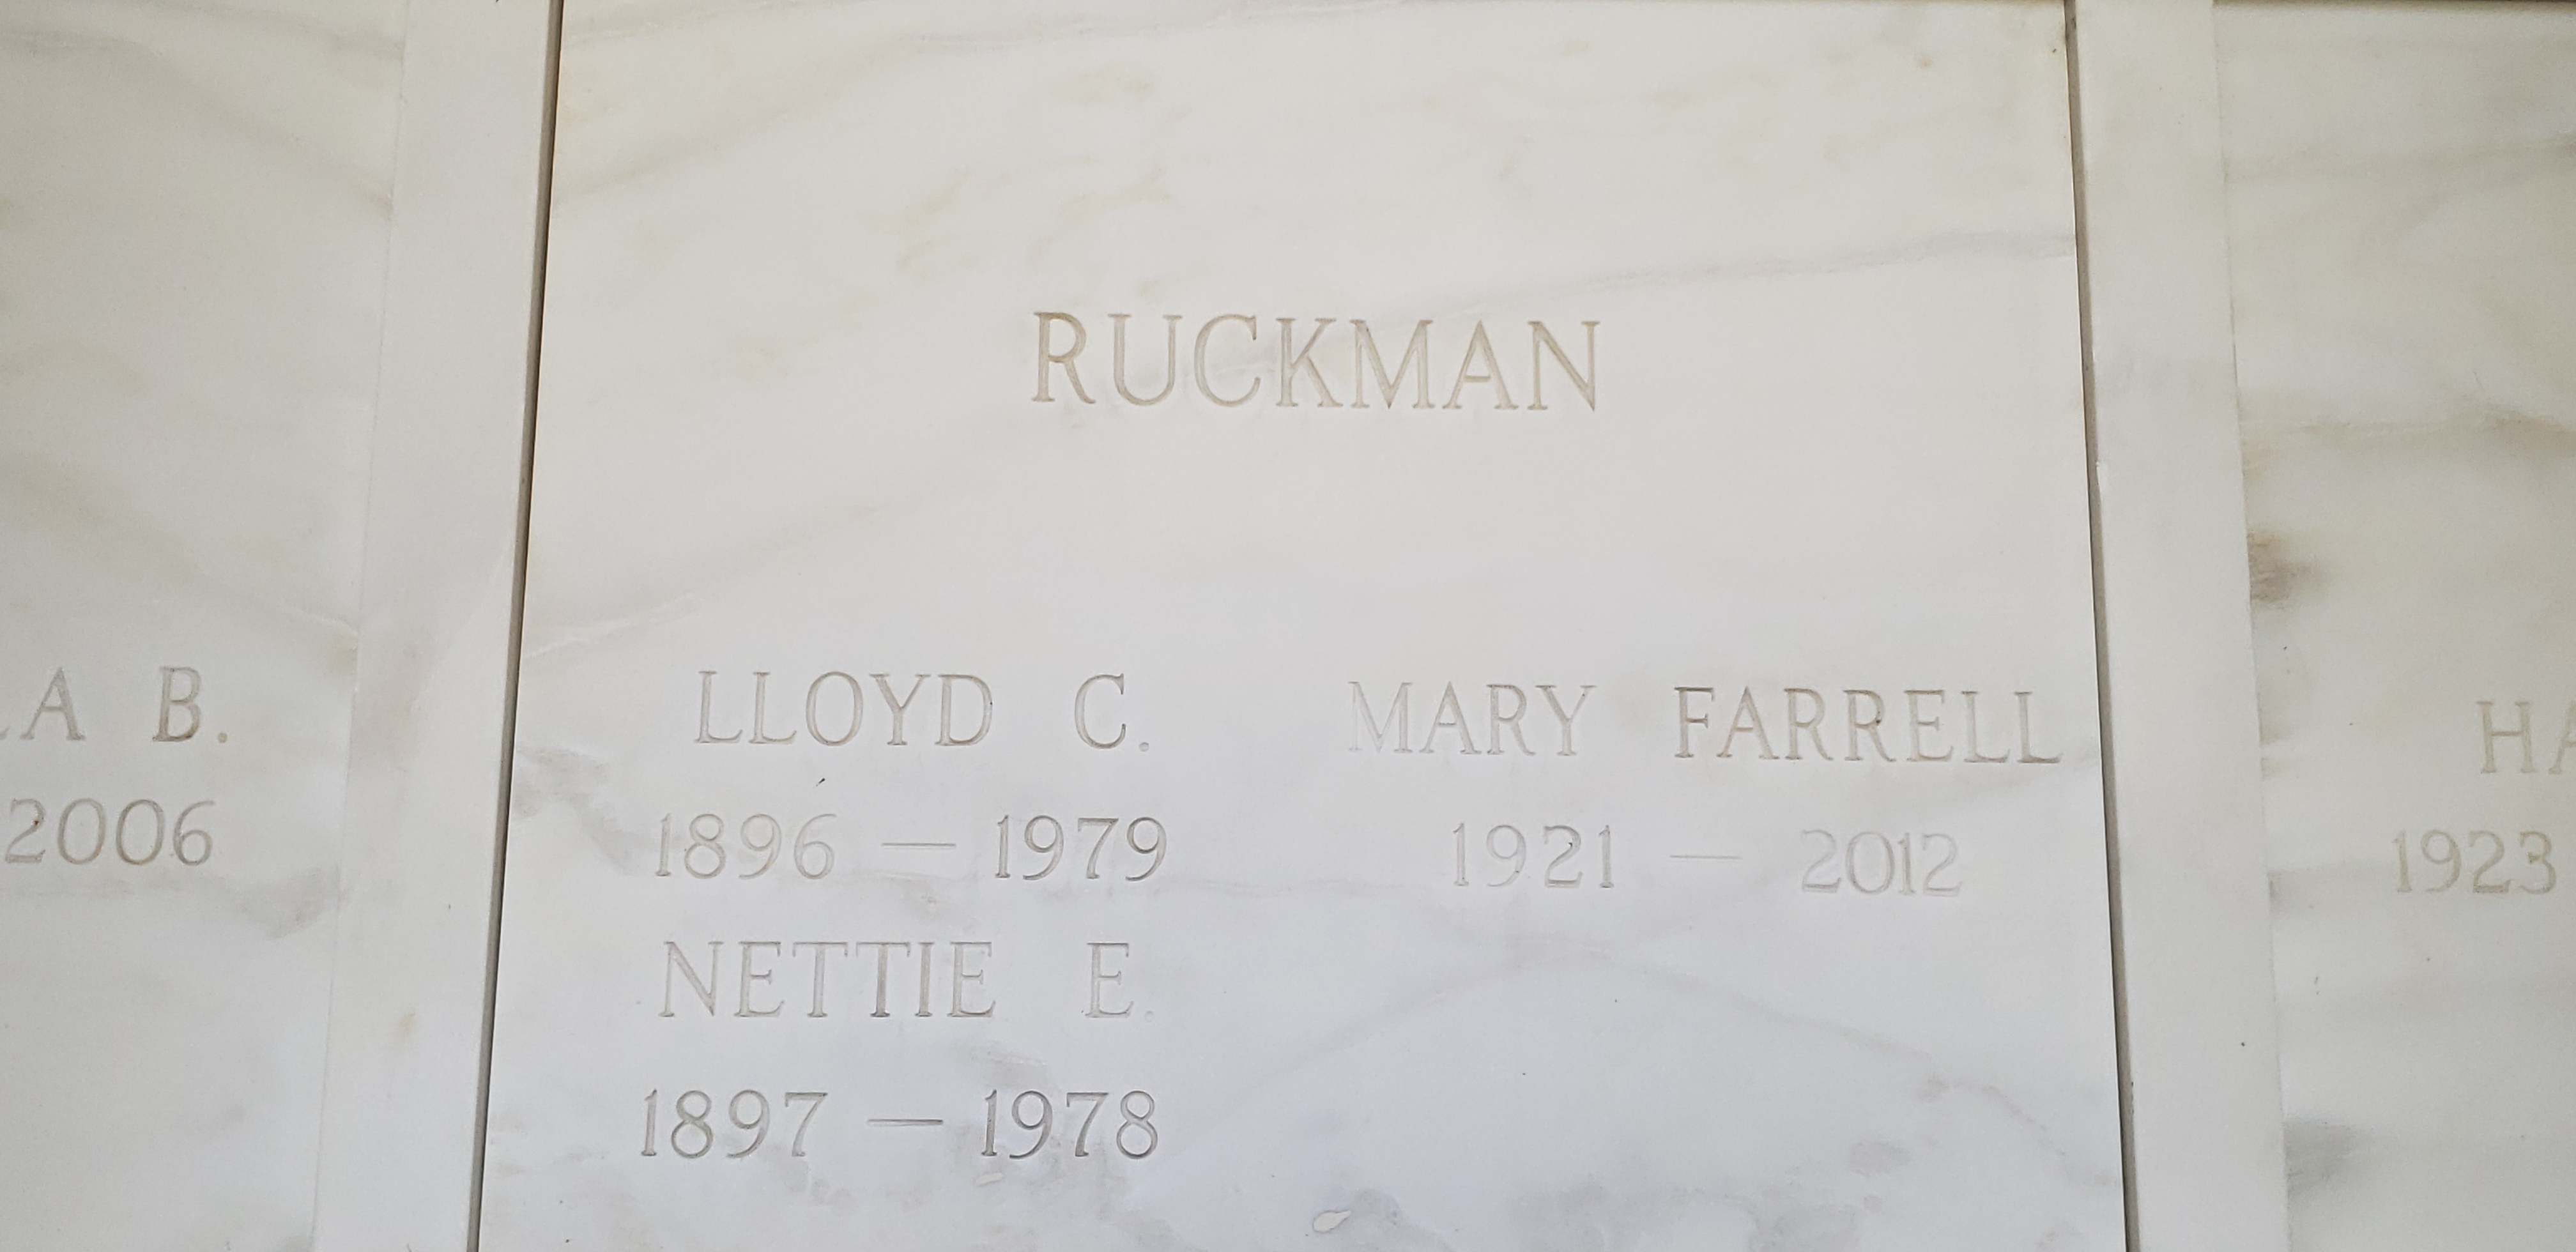 Lloyd C Ruckman